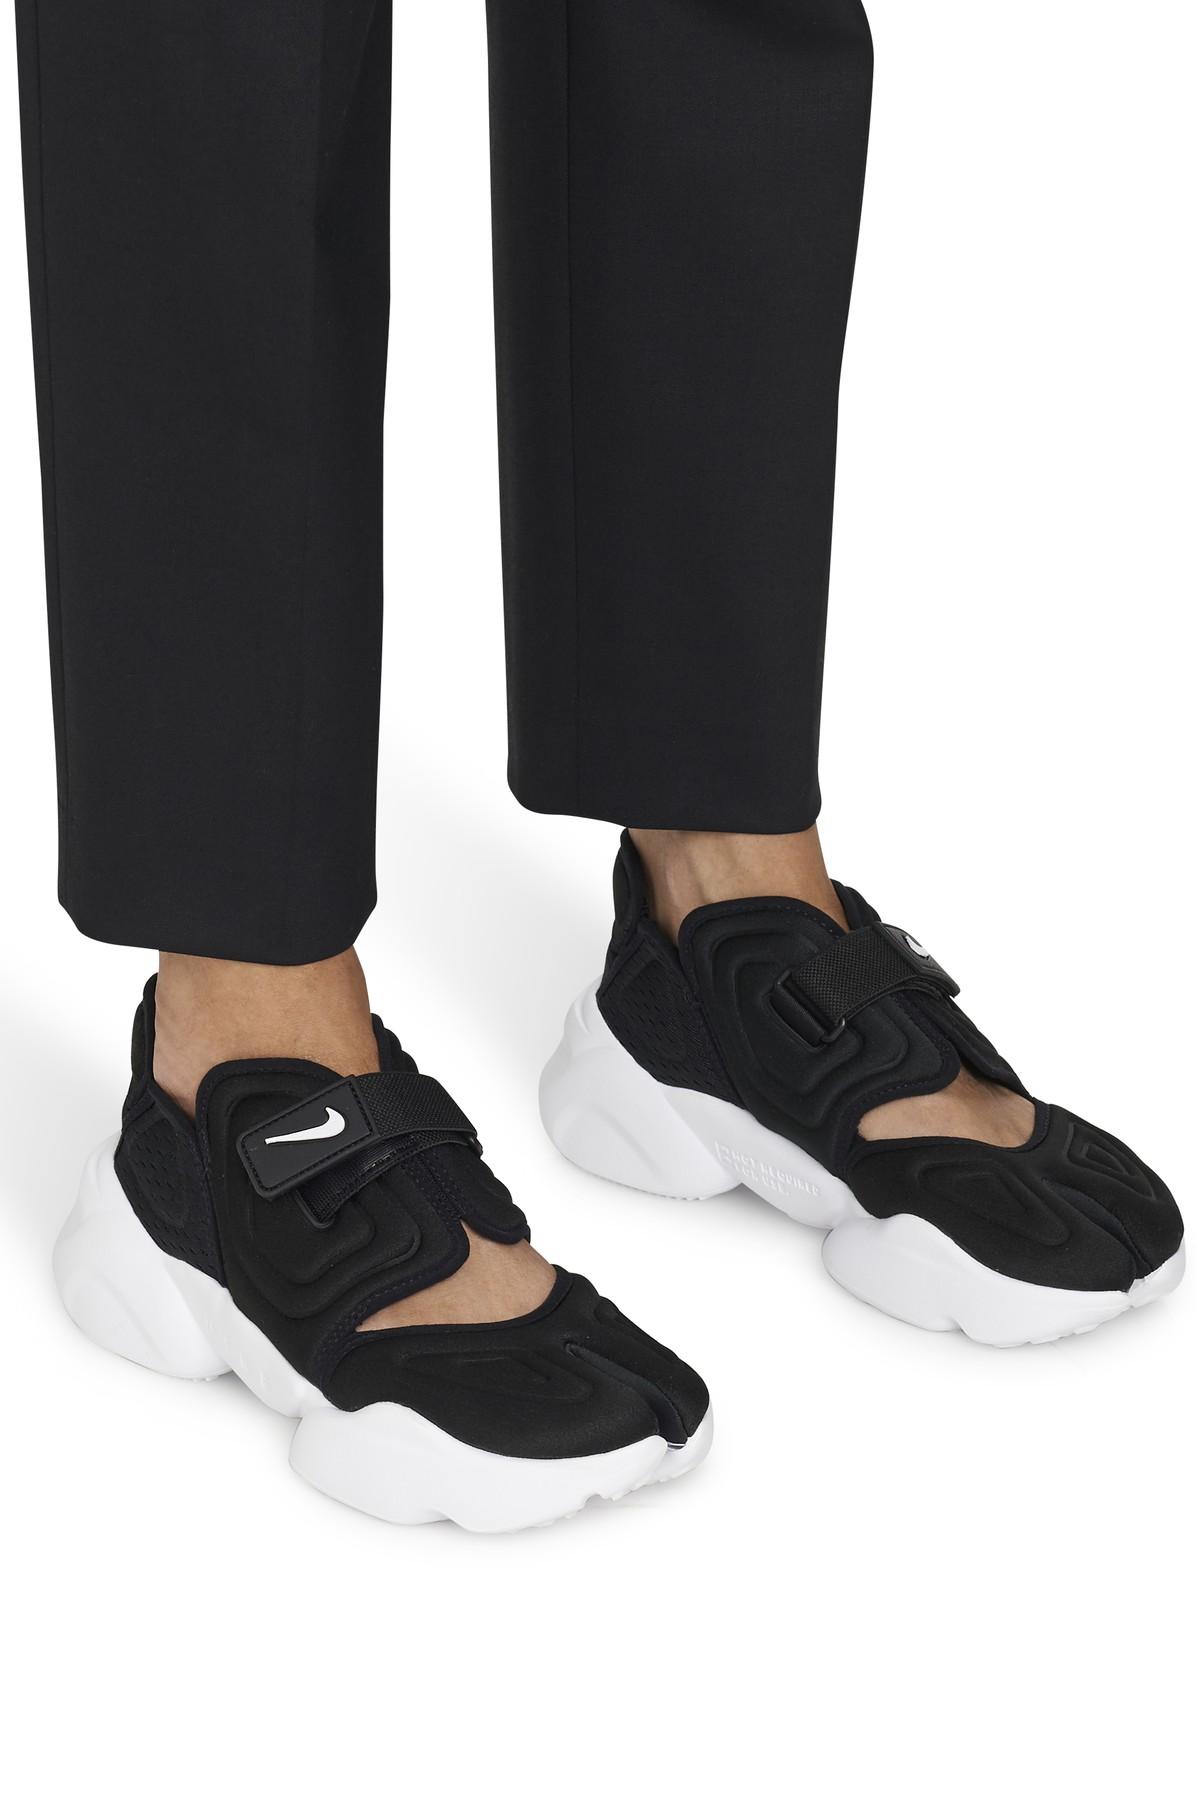 Nike Fleece Aqua Rift Shoes in Black (White) | Lyst Australia